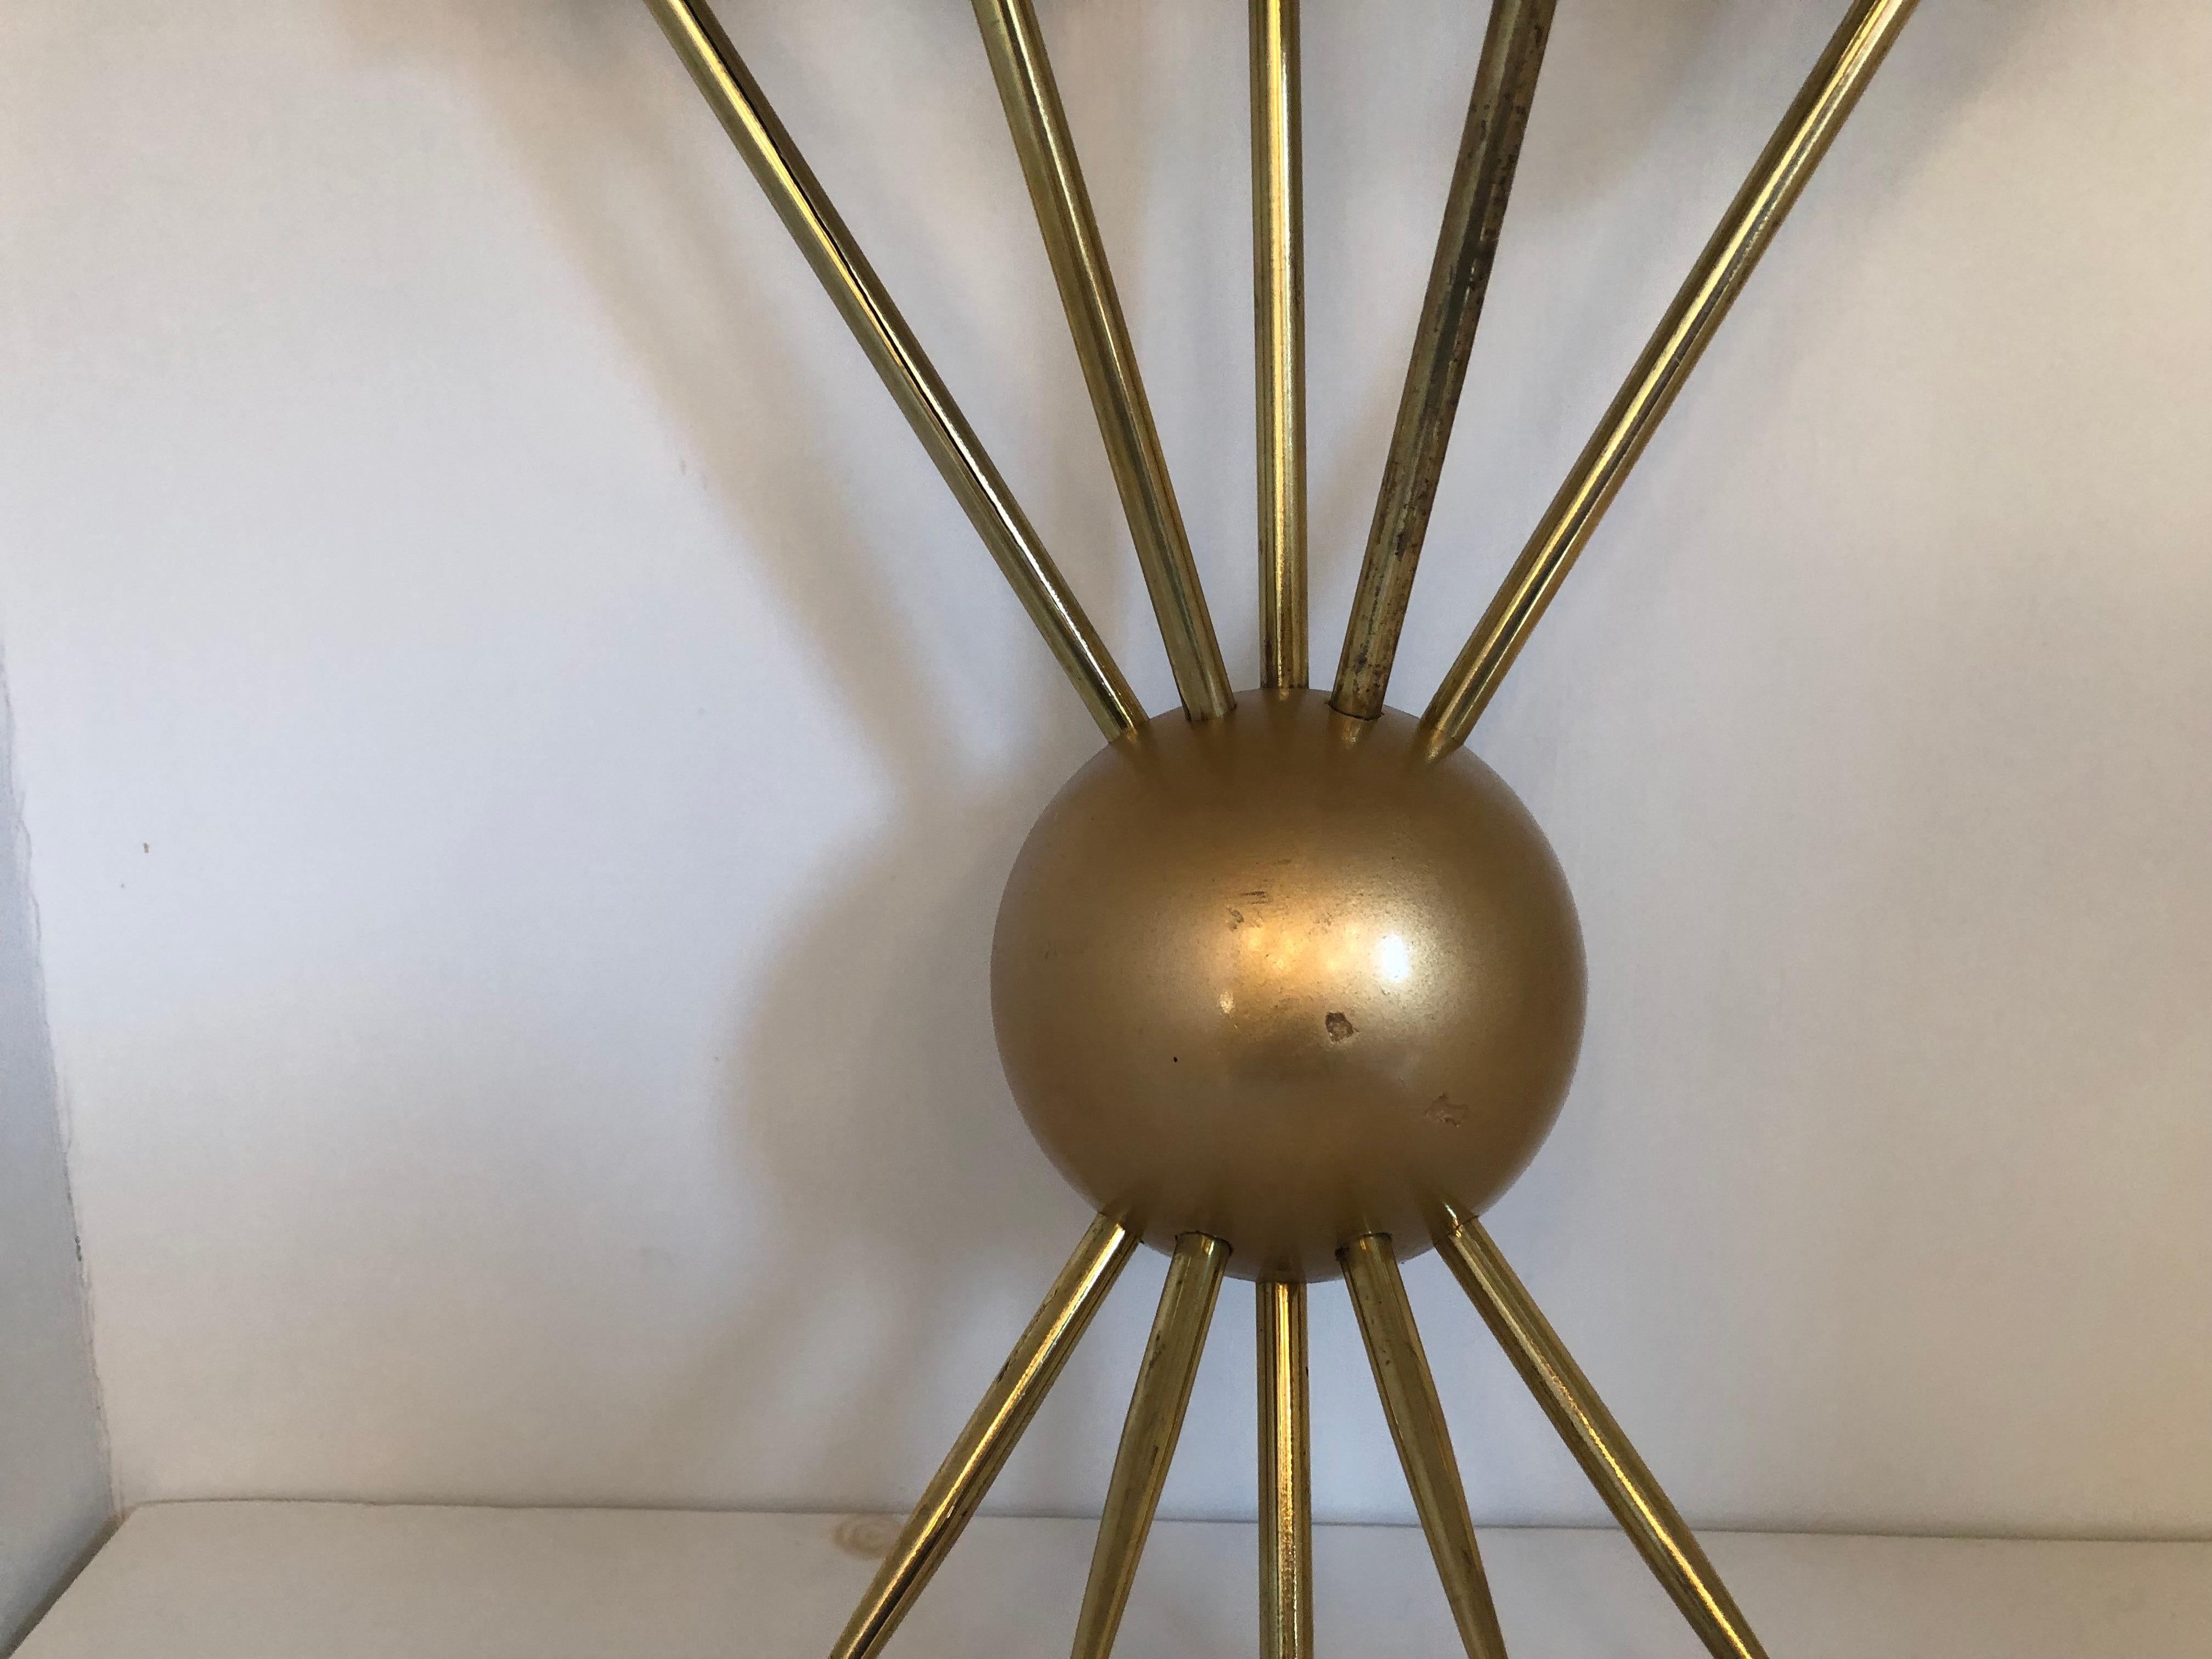 Pair of Italian wall light by Stilnovo
Ten polished brass light stems radiating from a matte brass semi-circular center with additional brass 